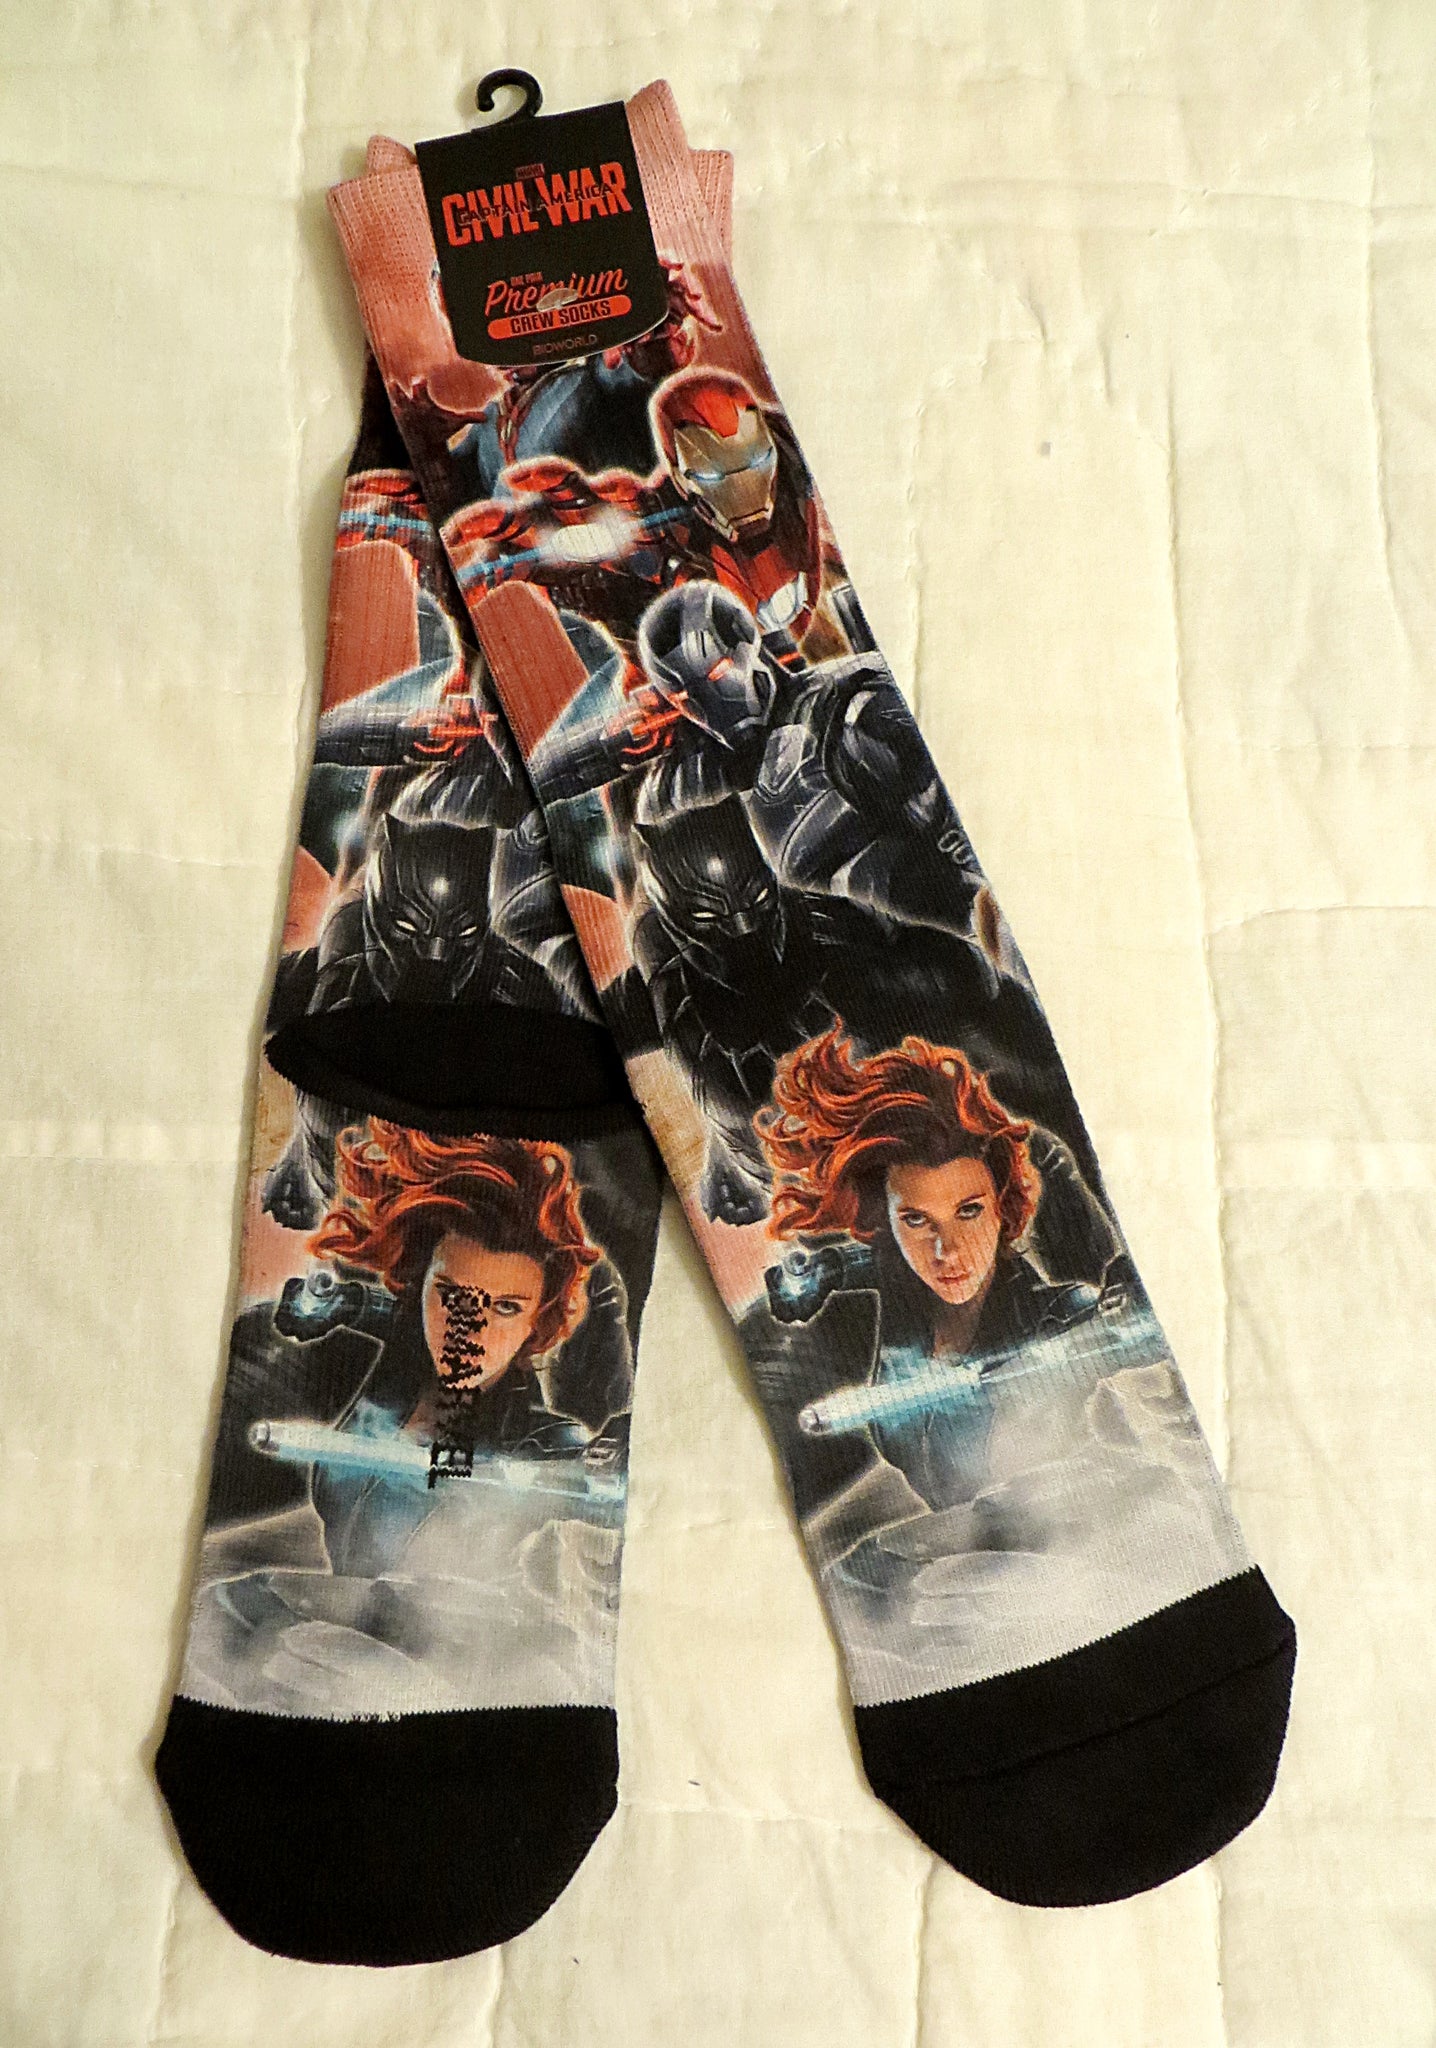 Captain America Civil War Sublimated Men's Crew Socks 4 Pair Bundle